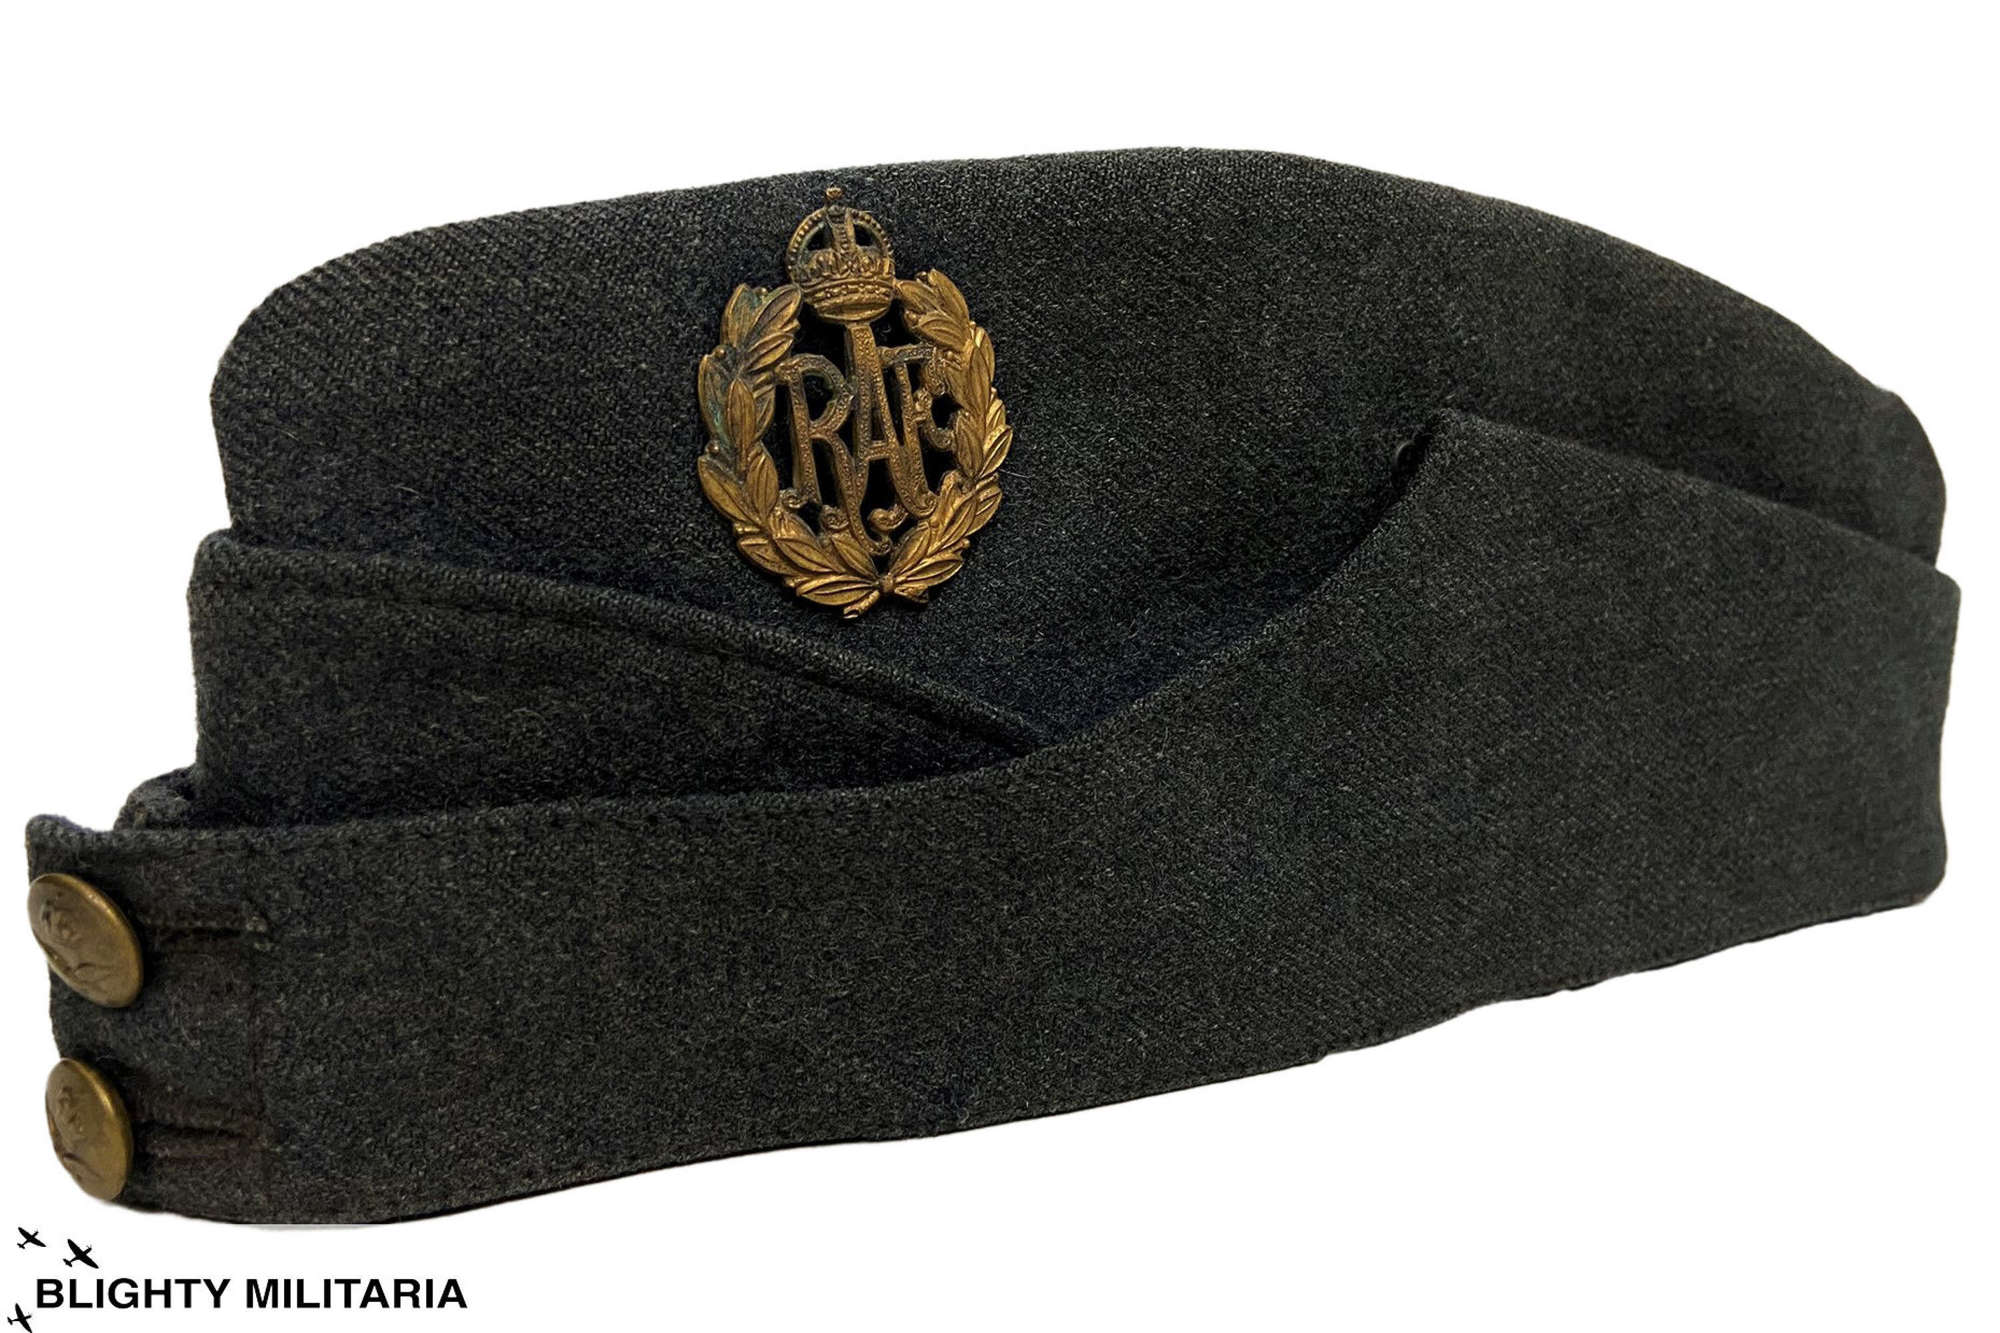 Original WW2 RAF Ordinary Airman's Field Service Cap